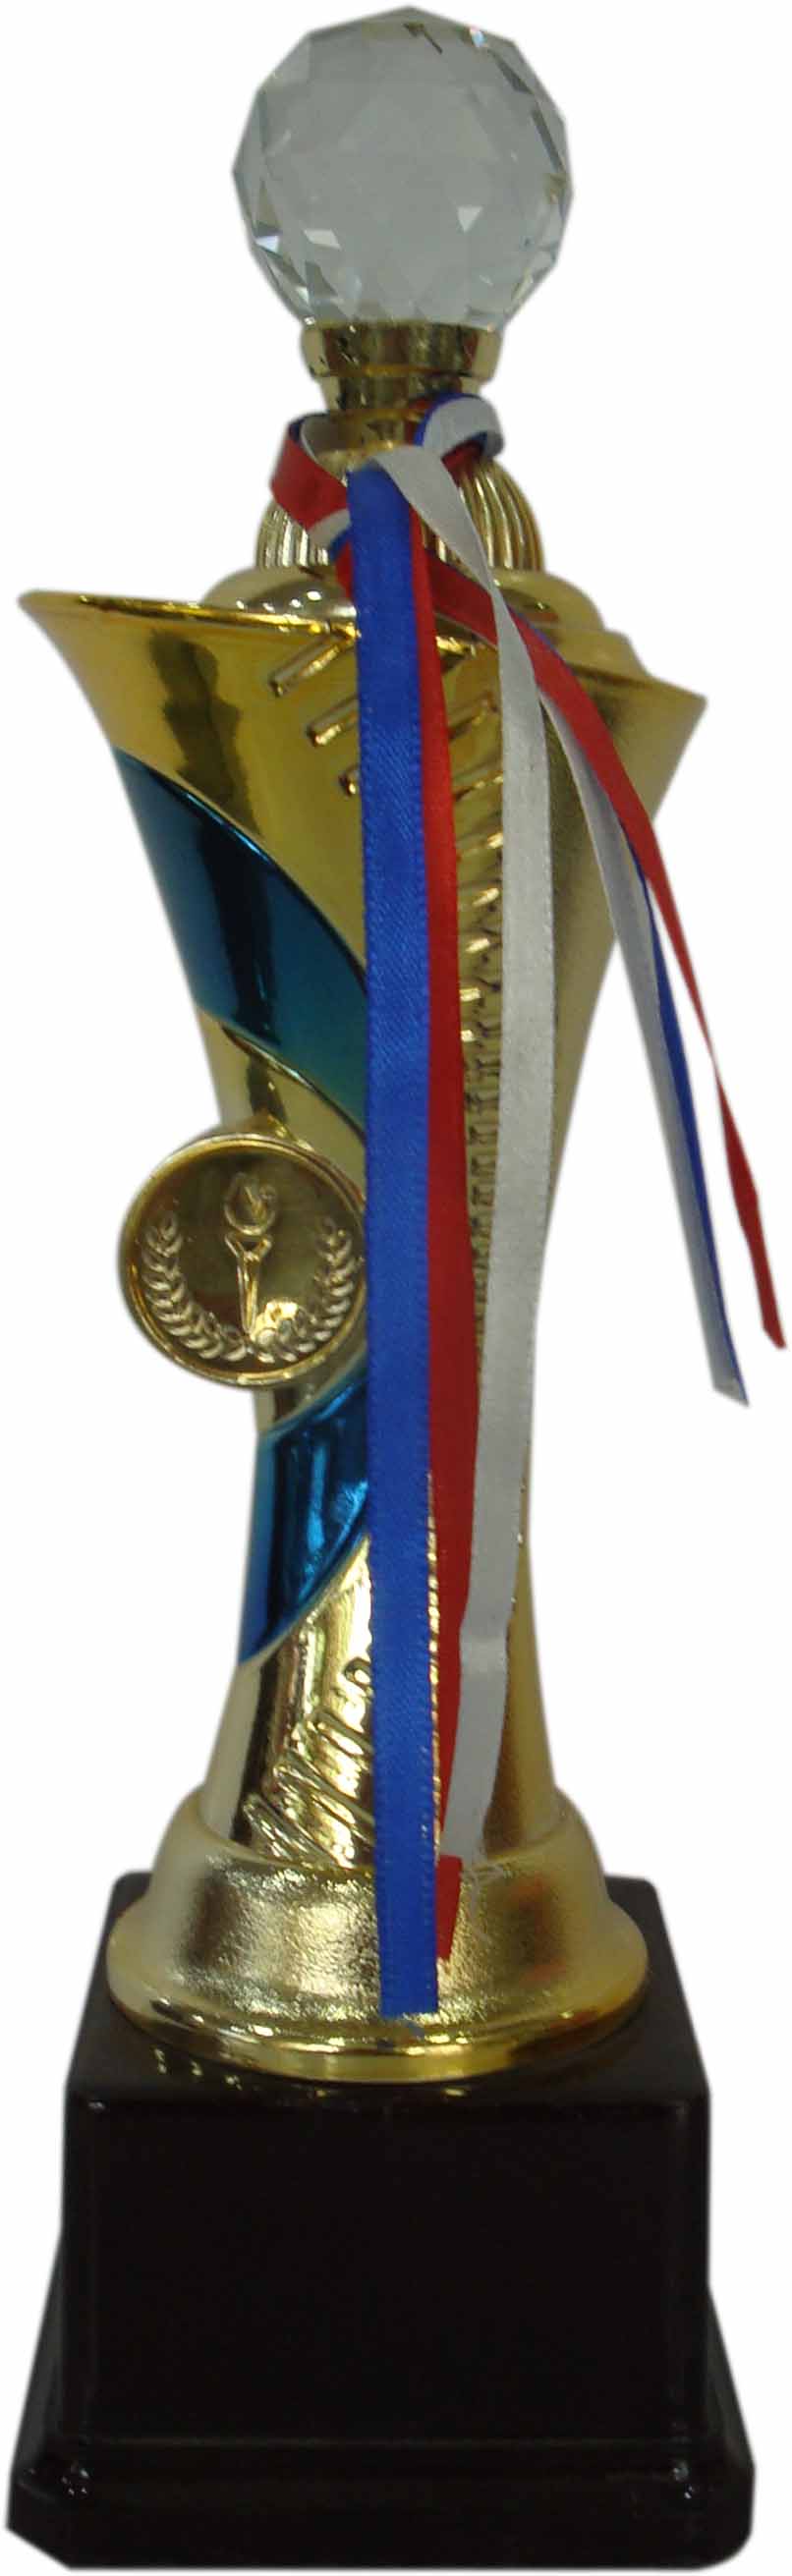 ABS MM 11  | Prize Land | ABS trophy manufacturer in Chandigarh - GLK2365